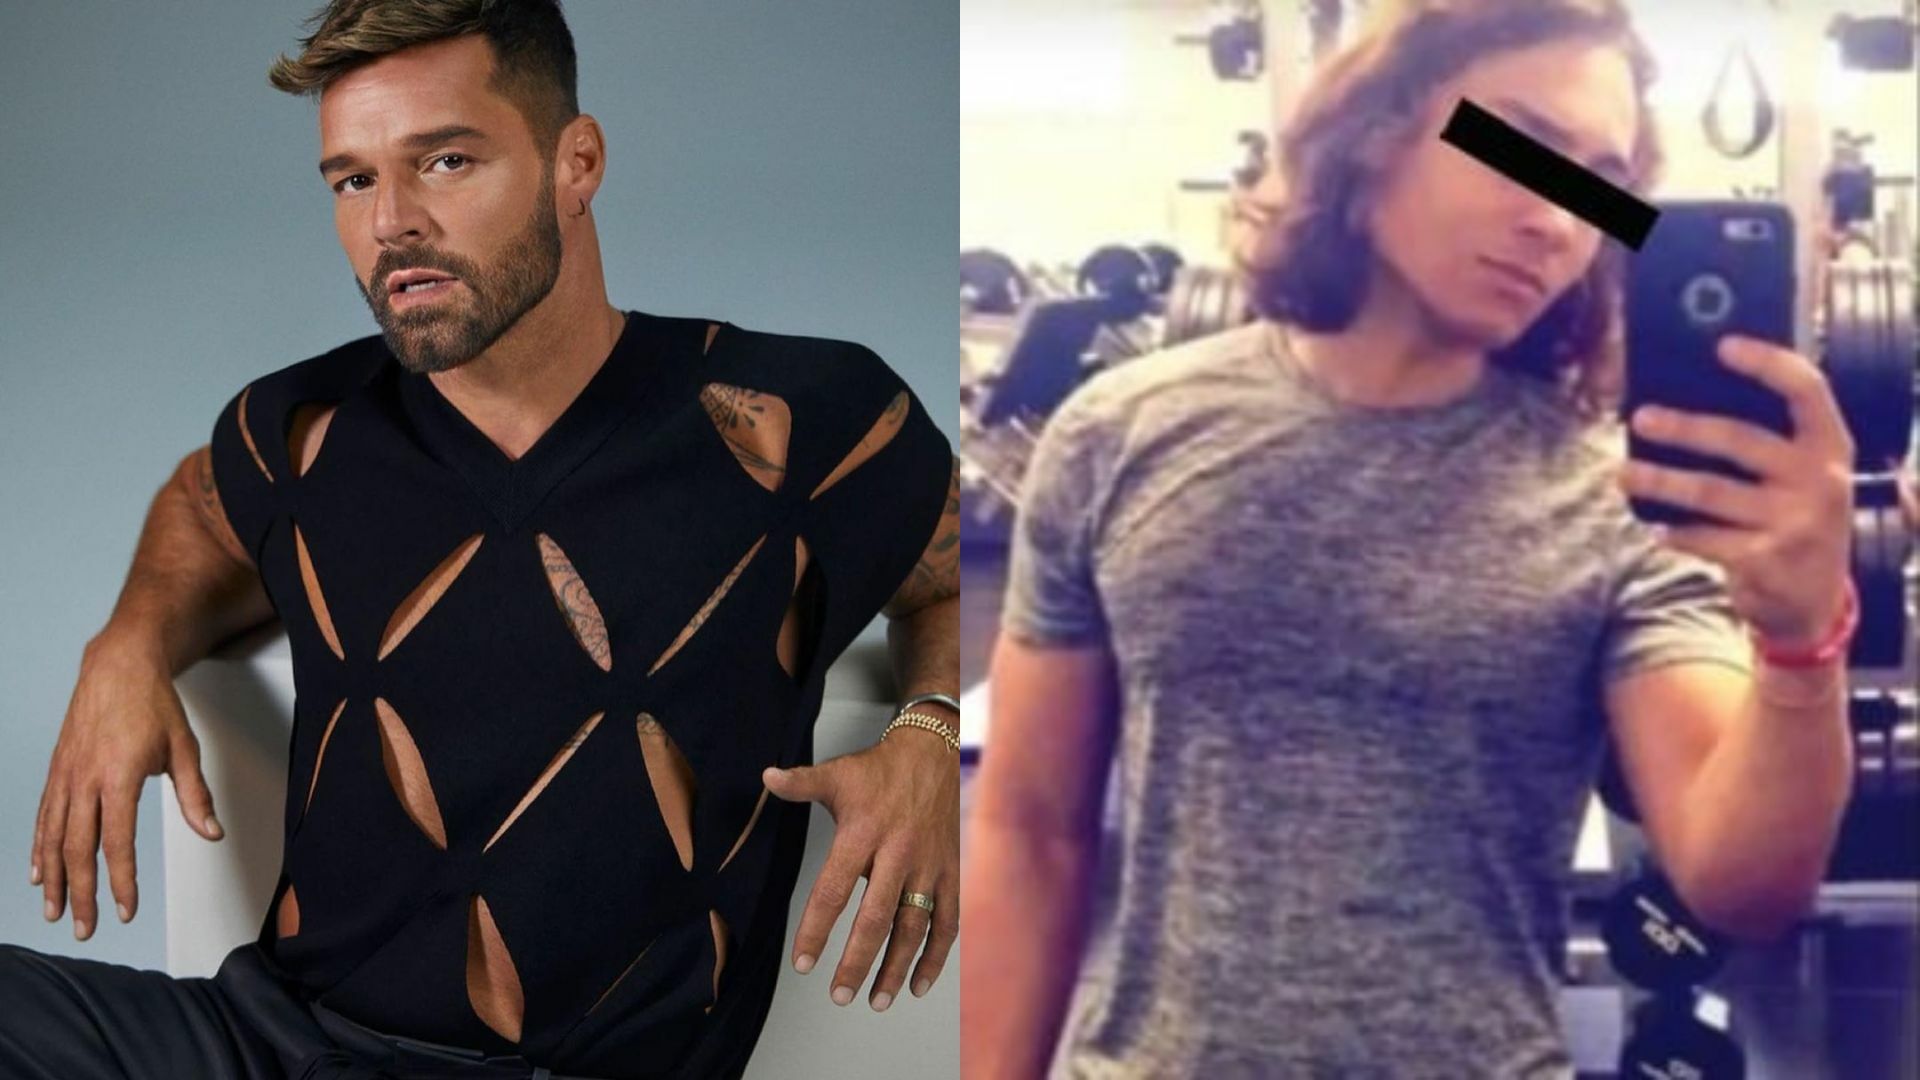 Sobrino de Ricky Martin asegura que ha recibido amenazas de muerte por llamada